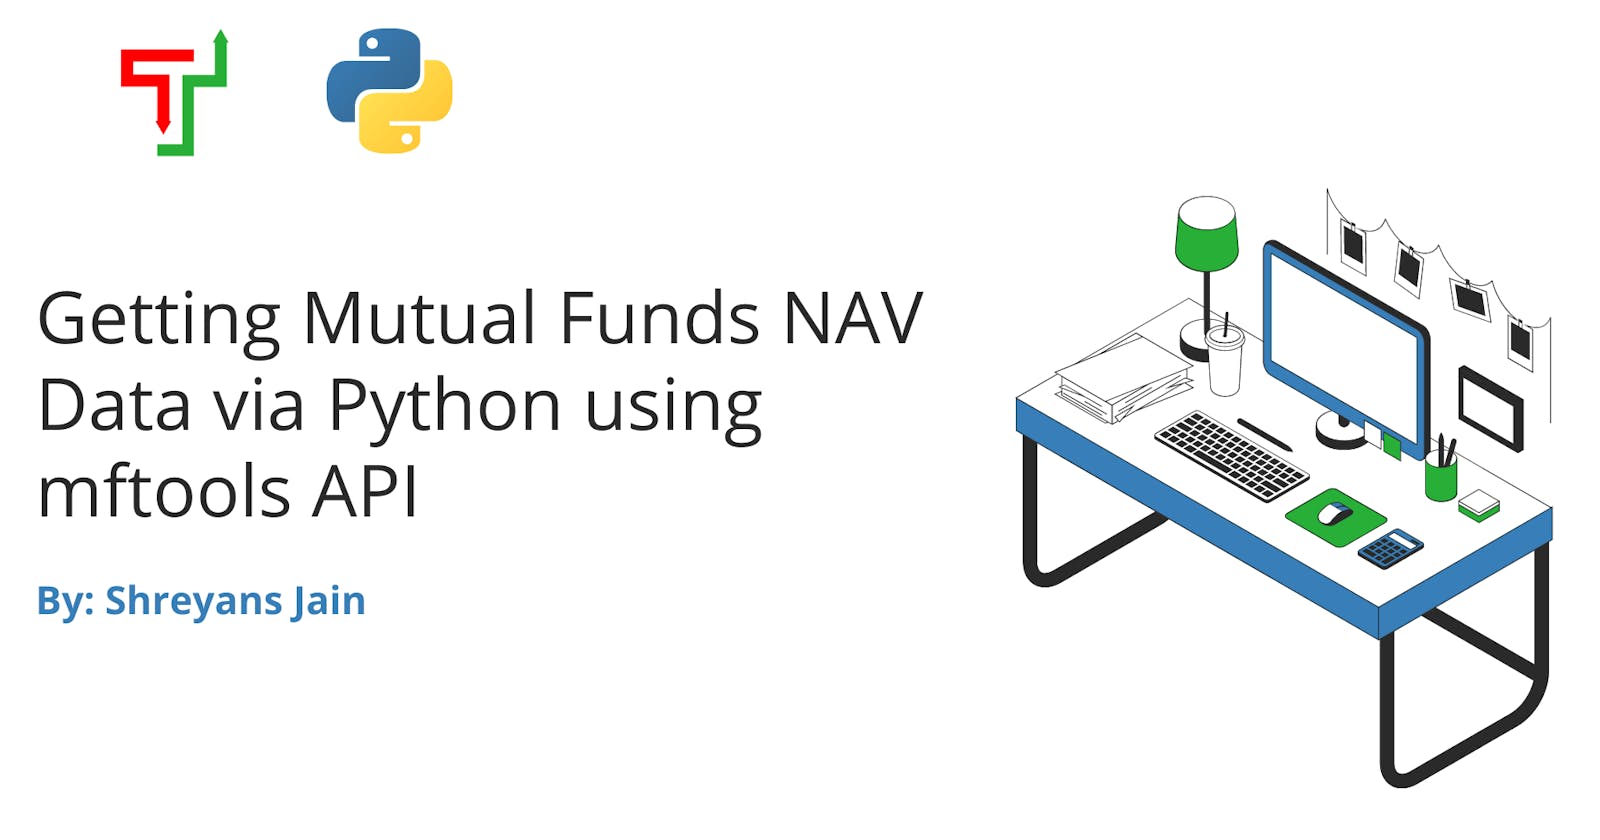 Getting Mutual Funds Net Asset Value via Python using mftools API